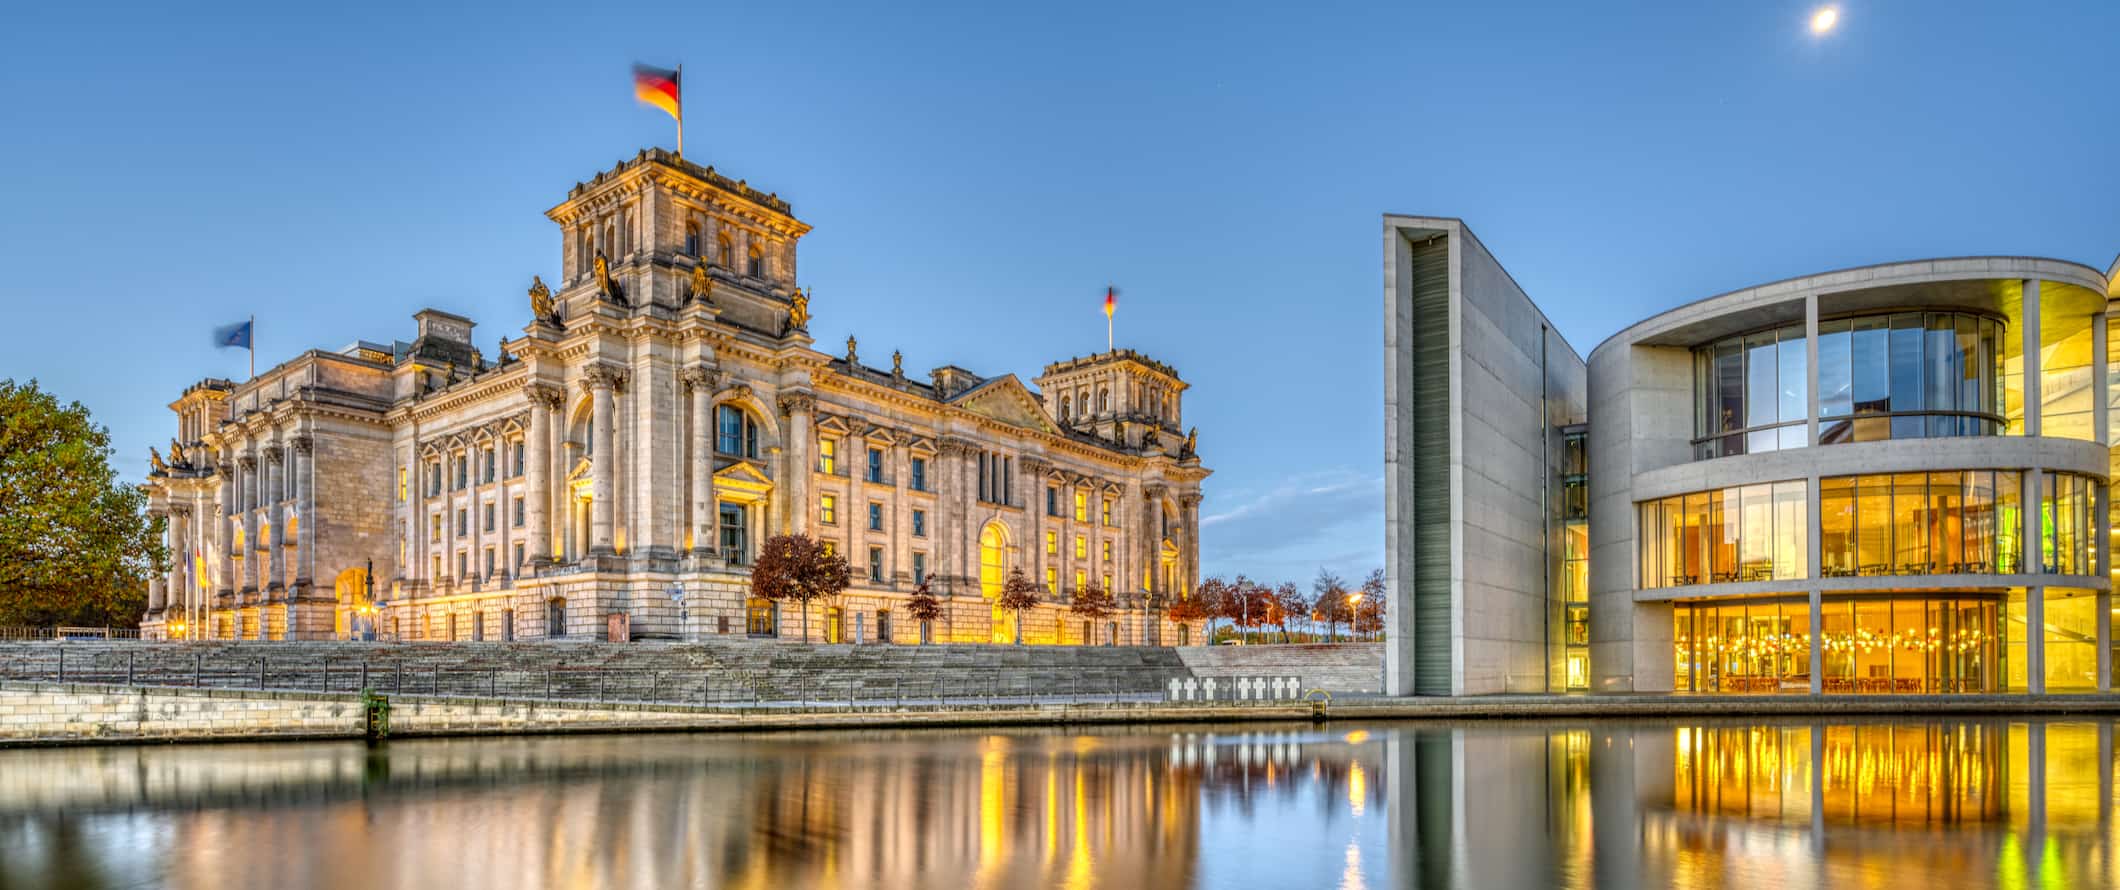 Reichstag din Berlin, Germania, vazut din apa din apropiere